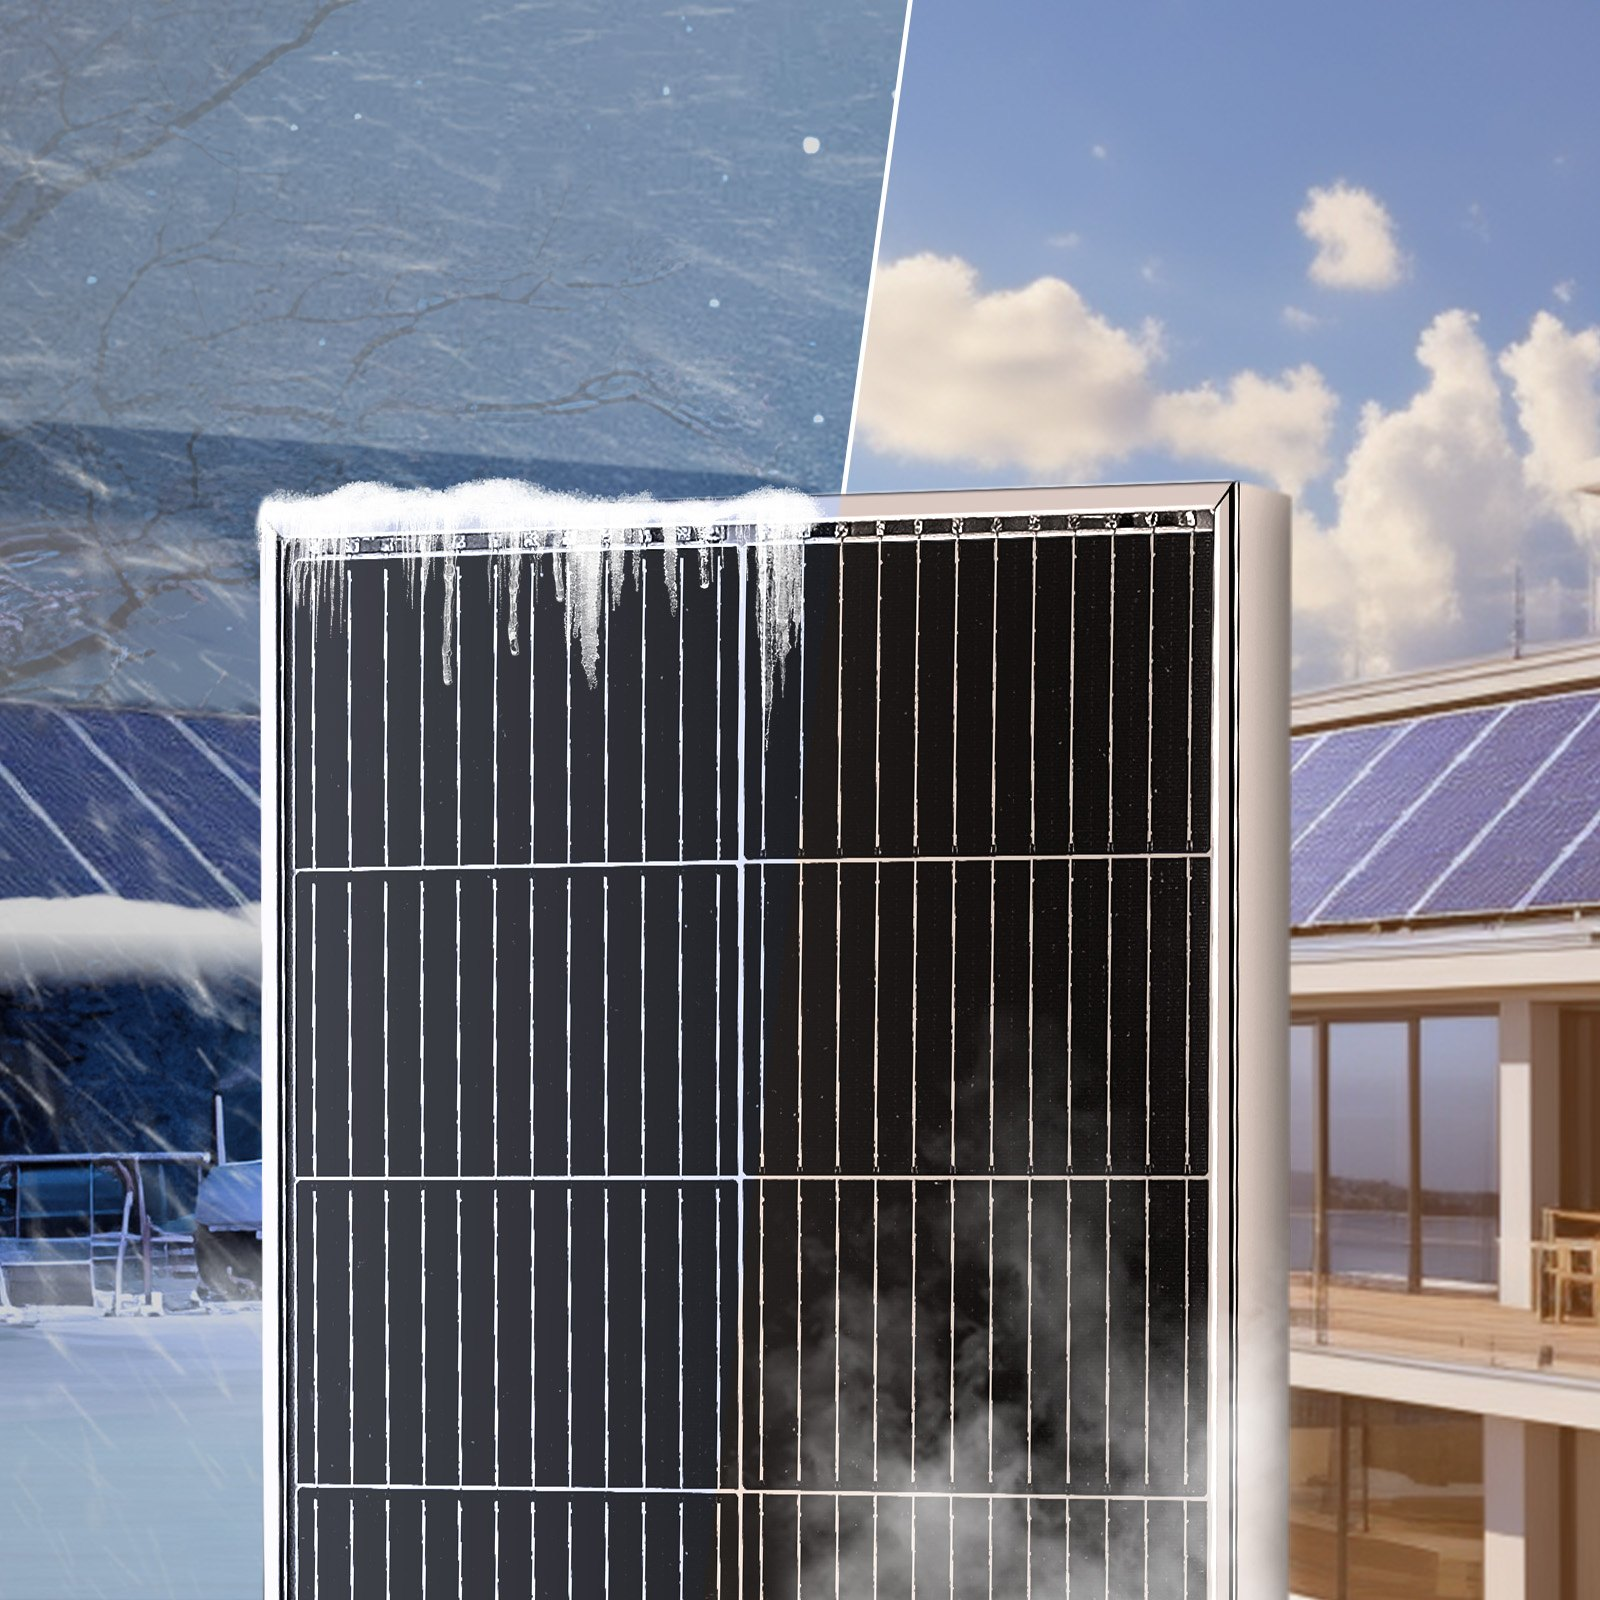 VEVOR 100W Monocrystalline Solar Panel Kit 12V Solar Panel & Charge Controller, Goodies N Stuff